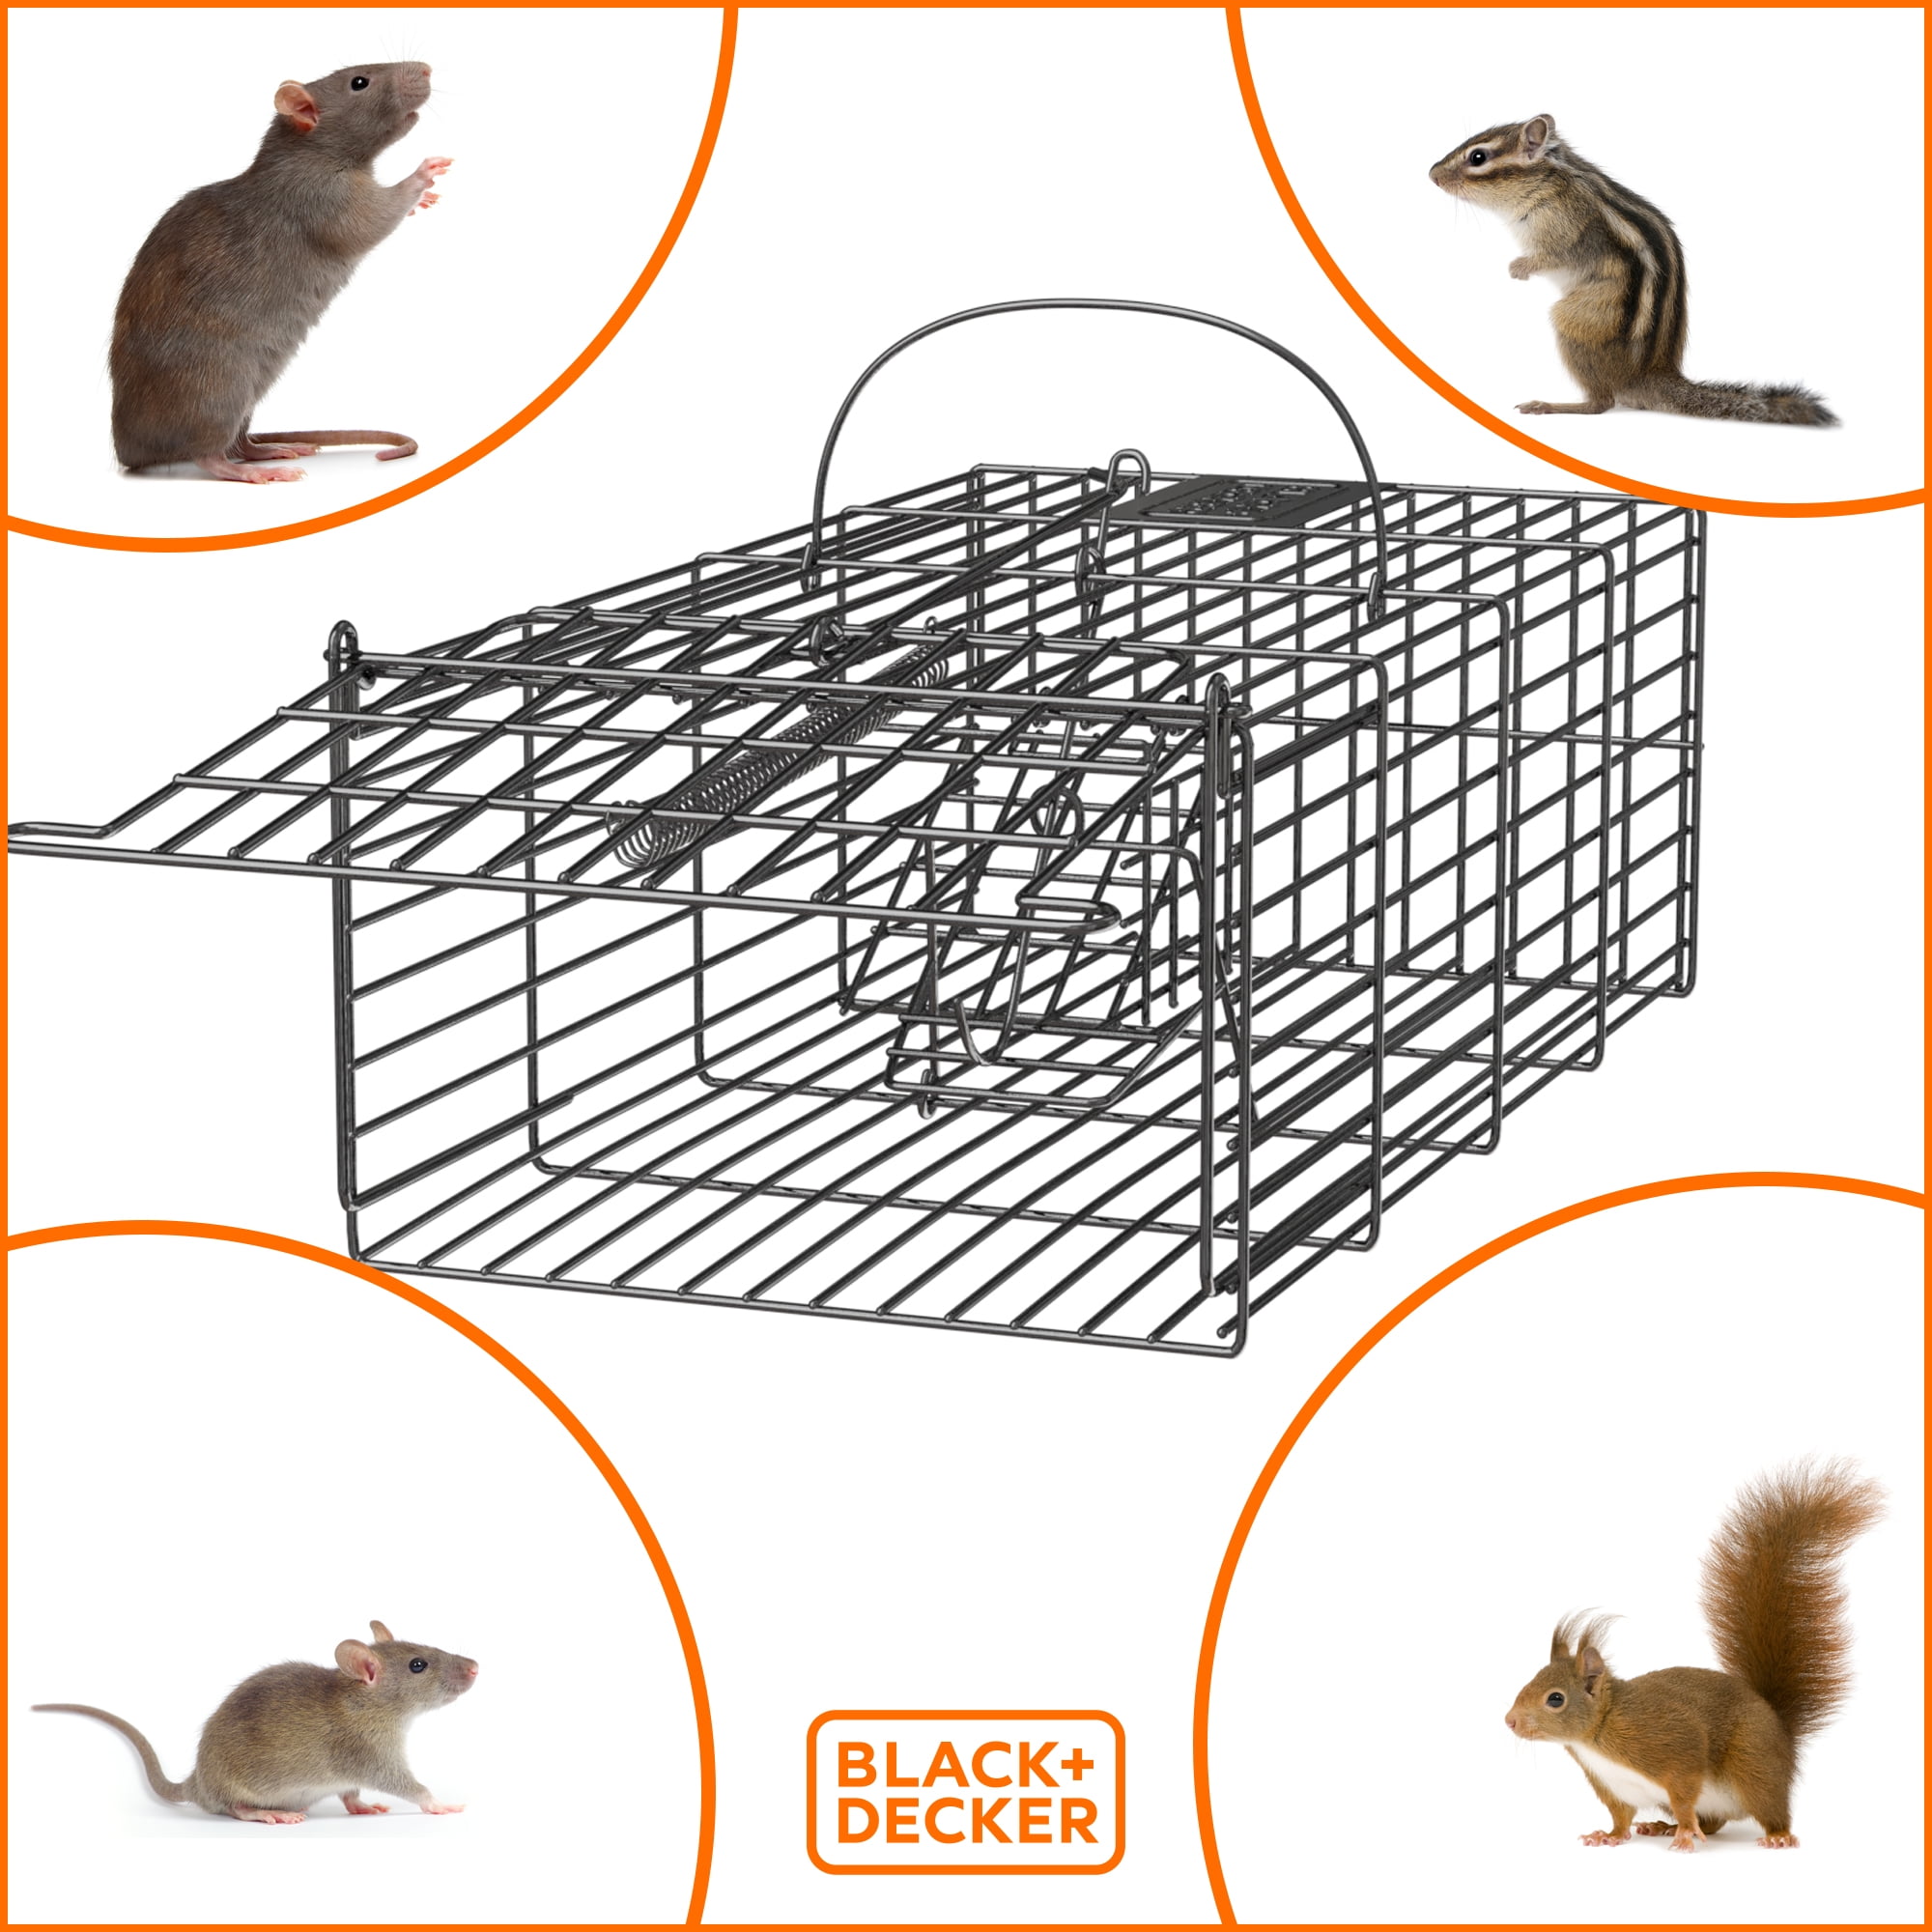 Black & Decker Mouse Trap Rat Trap Indoor Outdoor Snap Trap Touch Free  Reusable, 12 Pack 2BX-BDXPC816